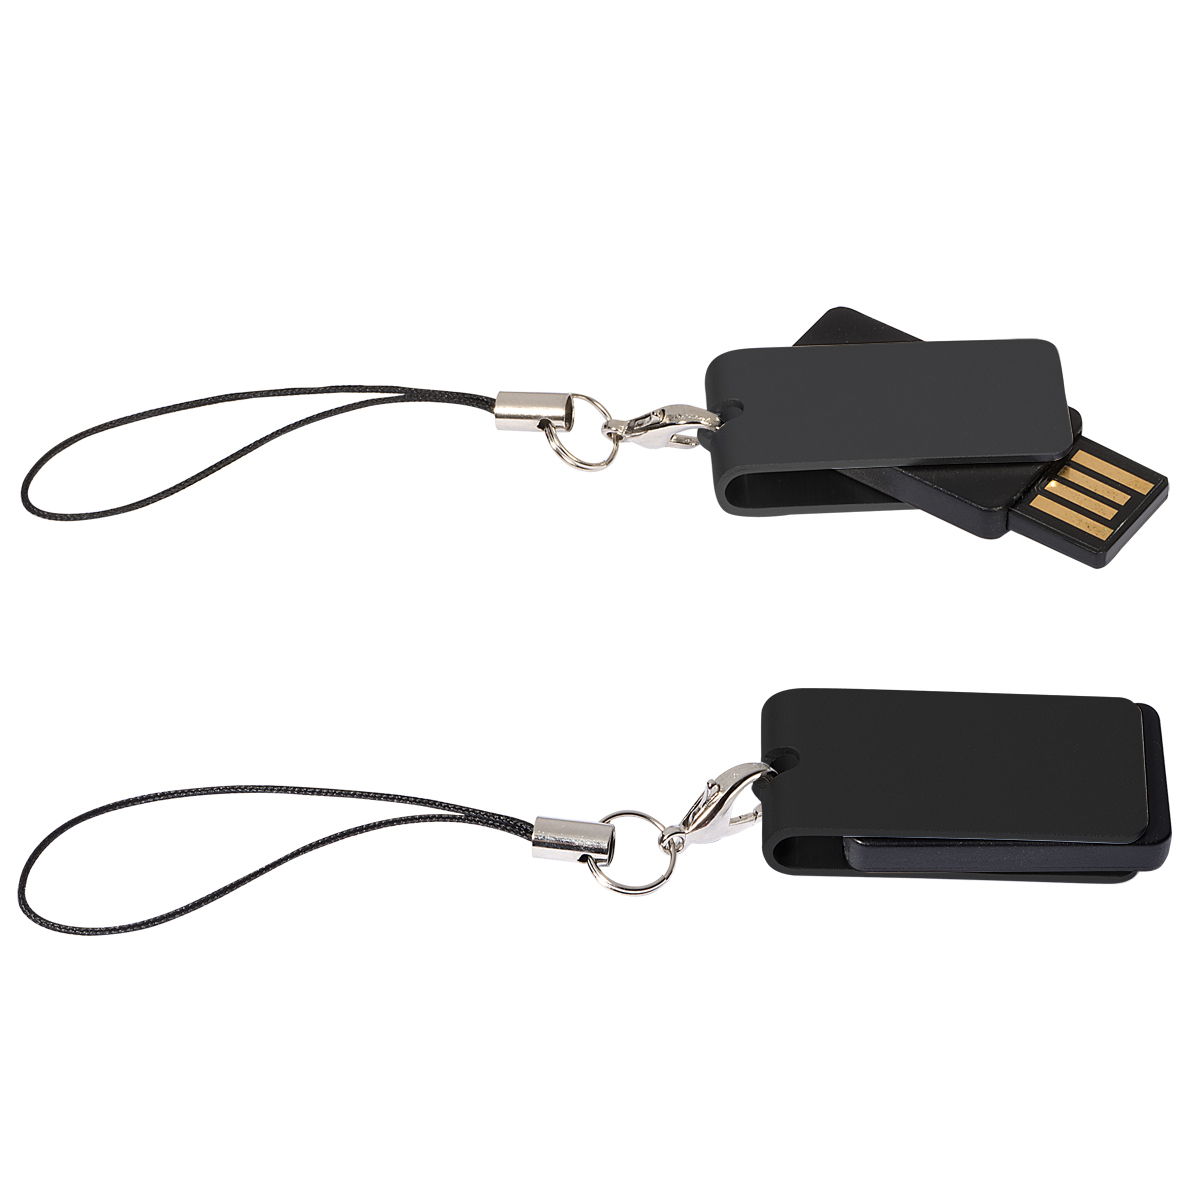 SlimFoldable USB Memory Flash Drive - 2GB